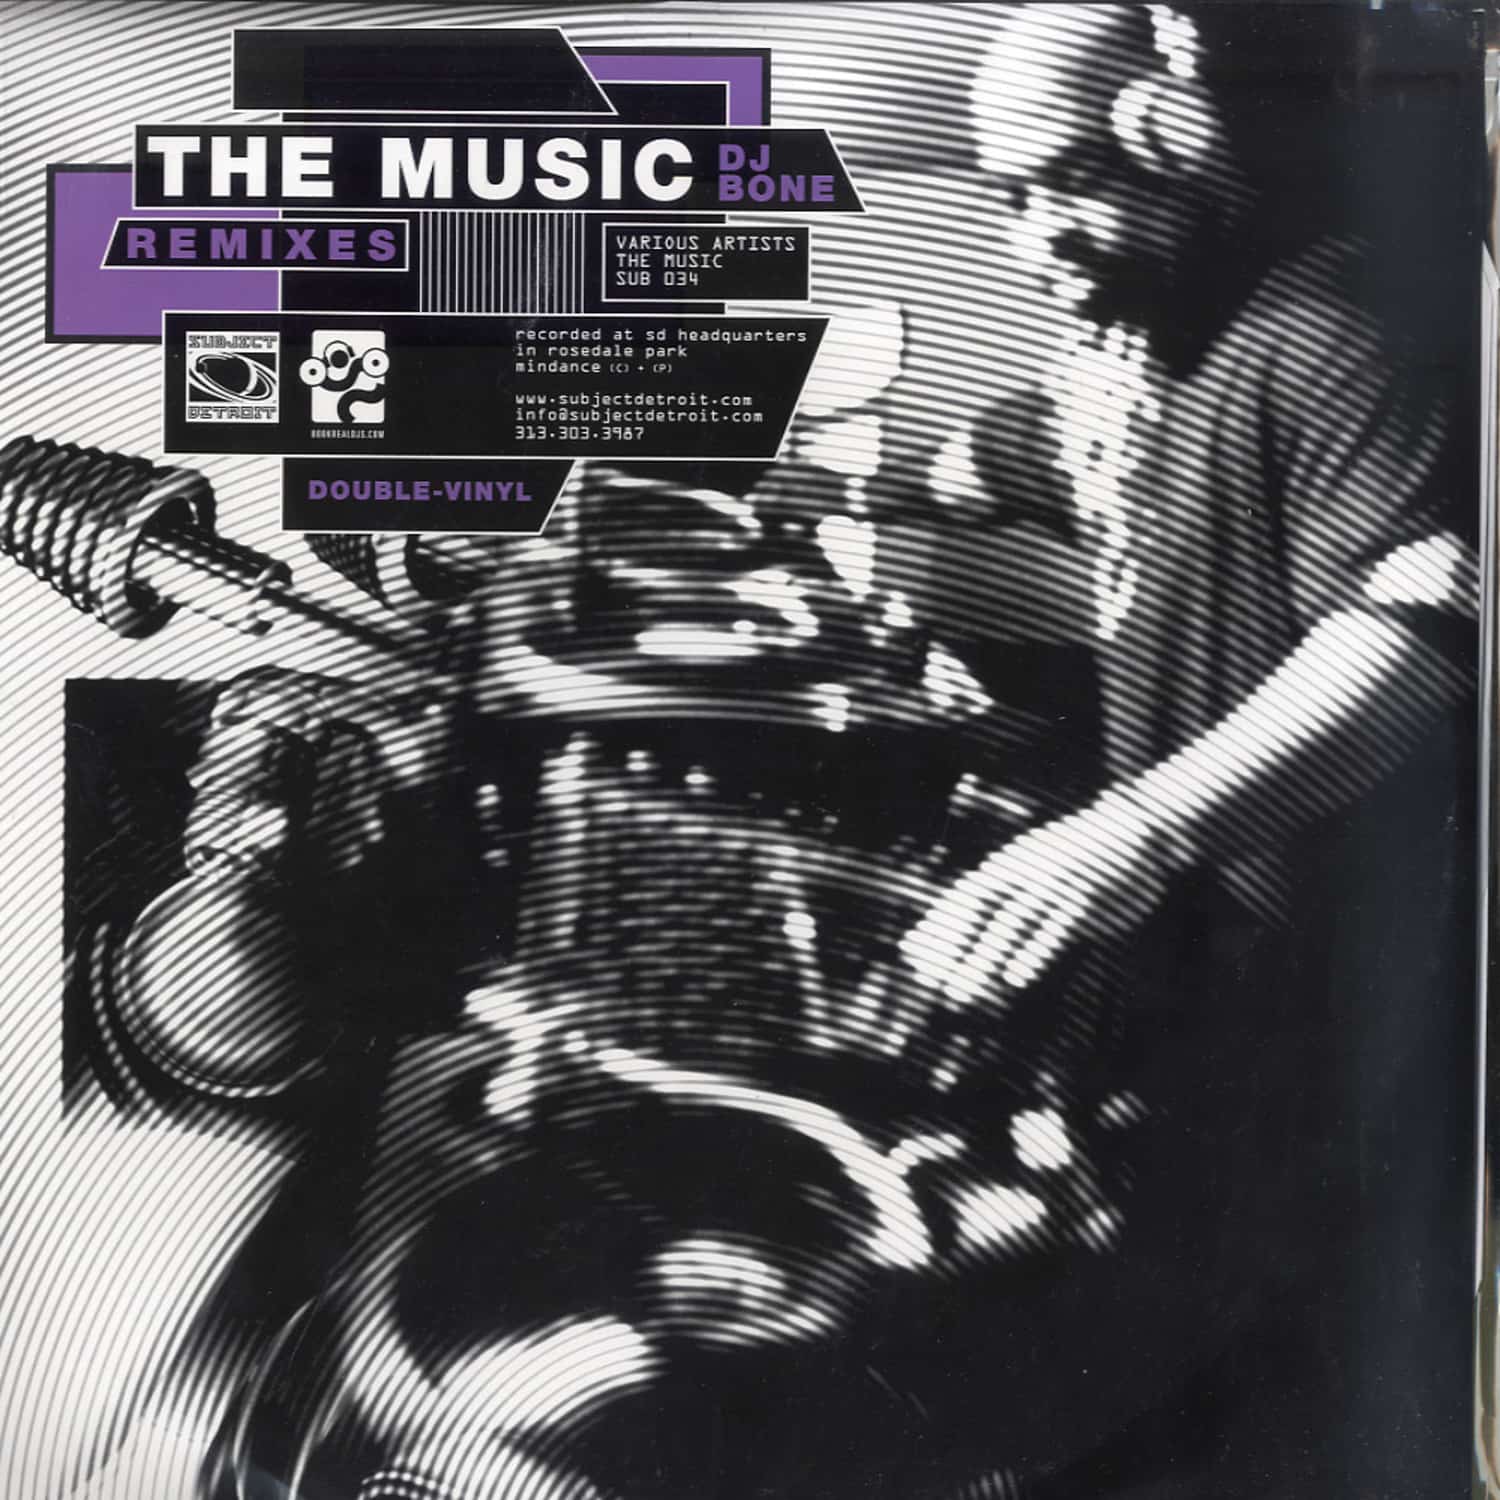 DJ Bone - THE MUSIC REMIXES 